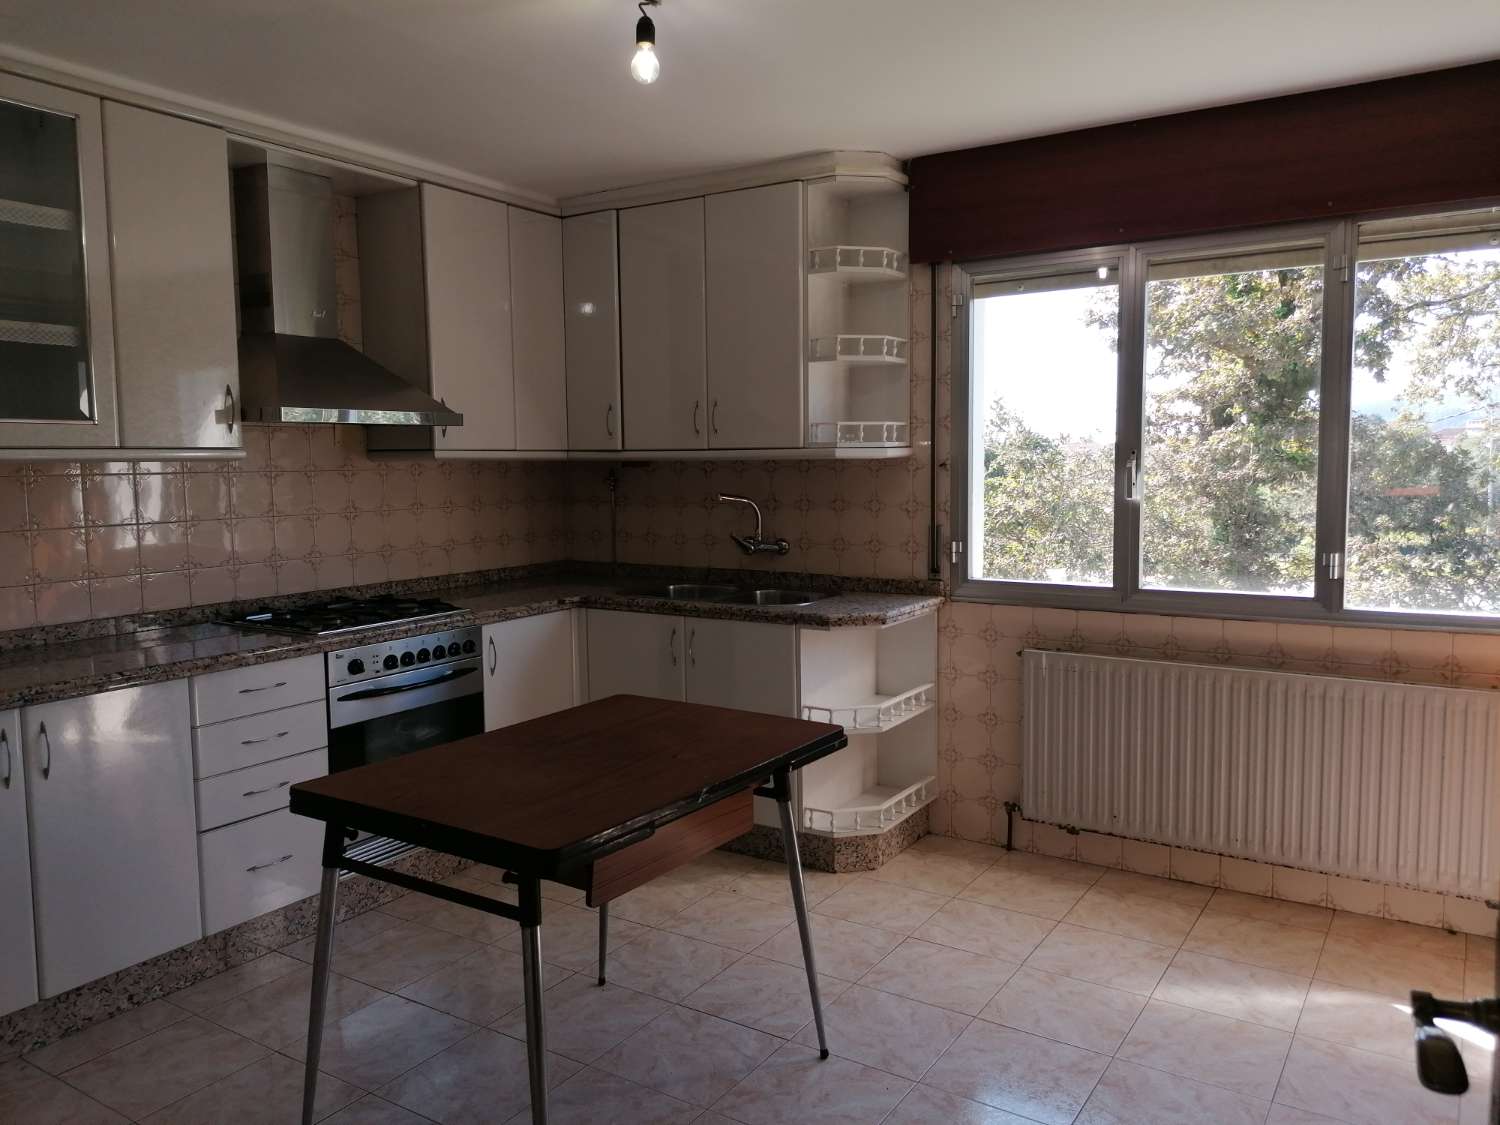 Pontevedra: A7134: Haus mit Finca zu verkaufen 4 km von Pontevedra entfernt...